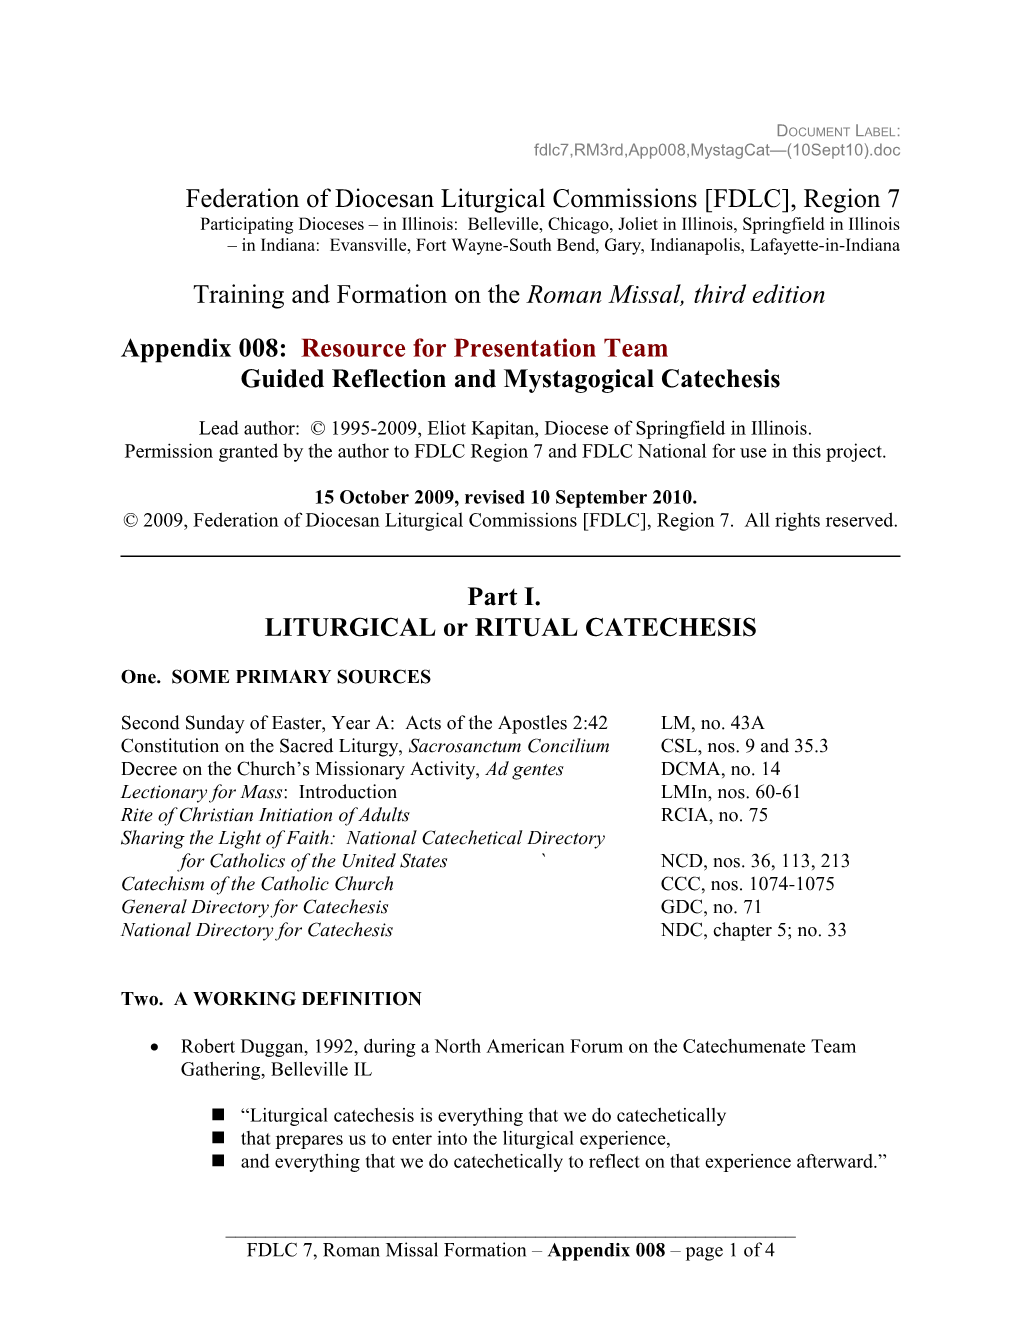 Federation of Diocesan Liturgical Commissions FDLC , Region 7 s1